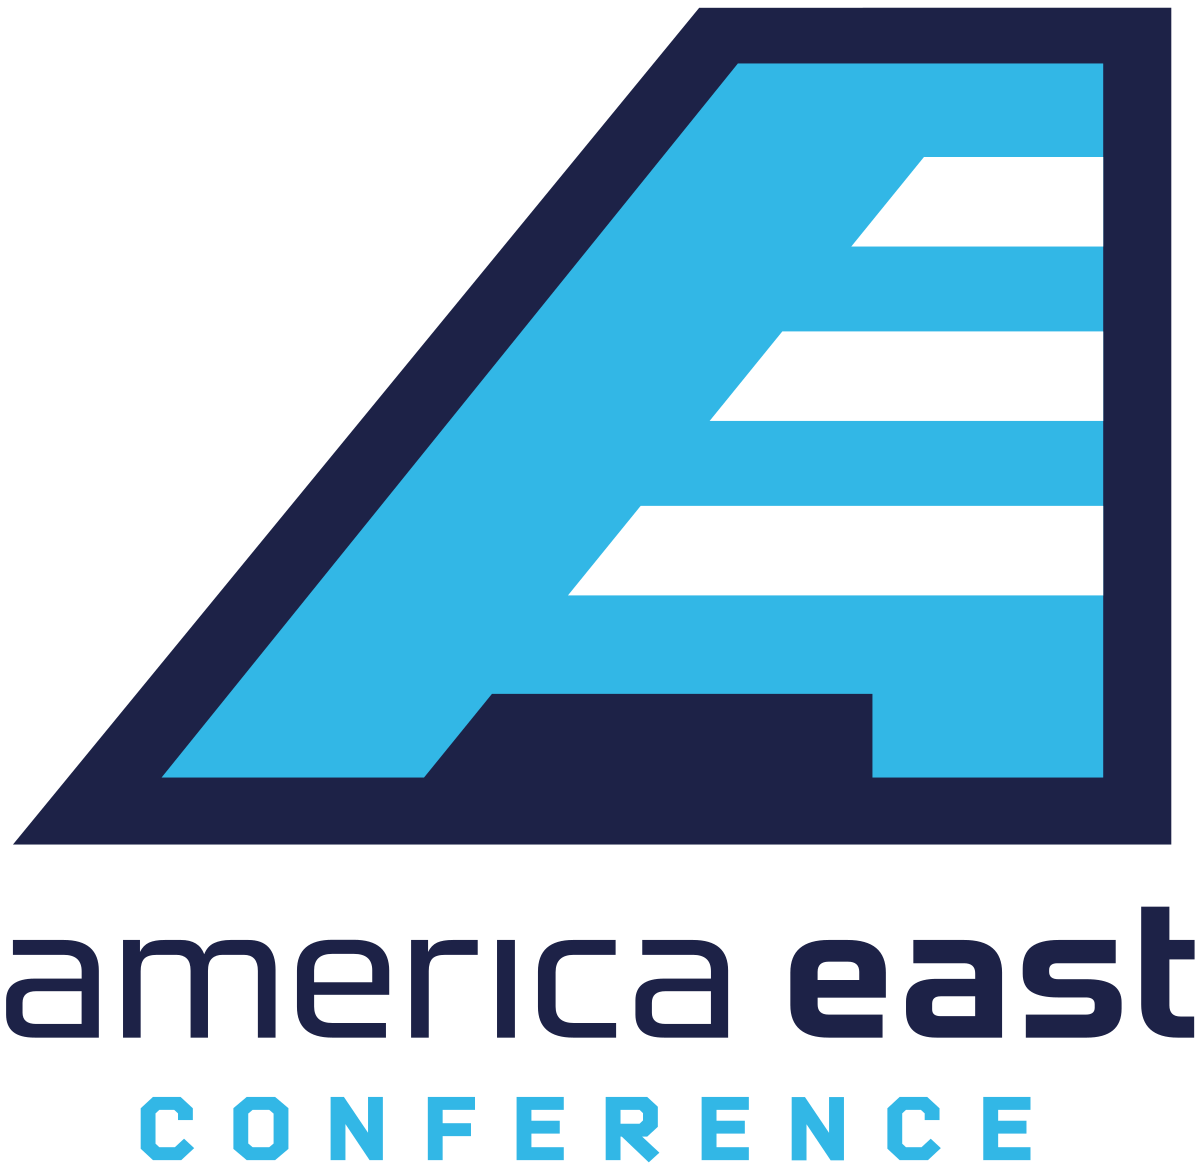 American NCAA Logo - 30 NCAA Conference Logos Ranked | macanomics